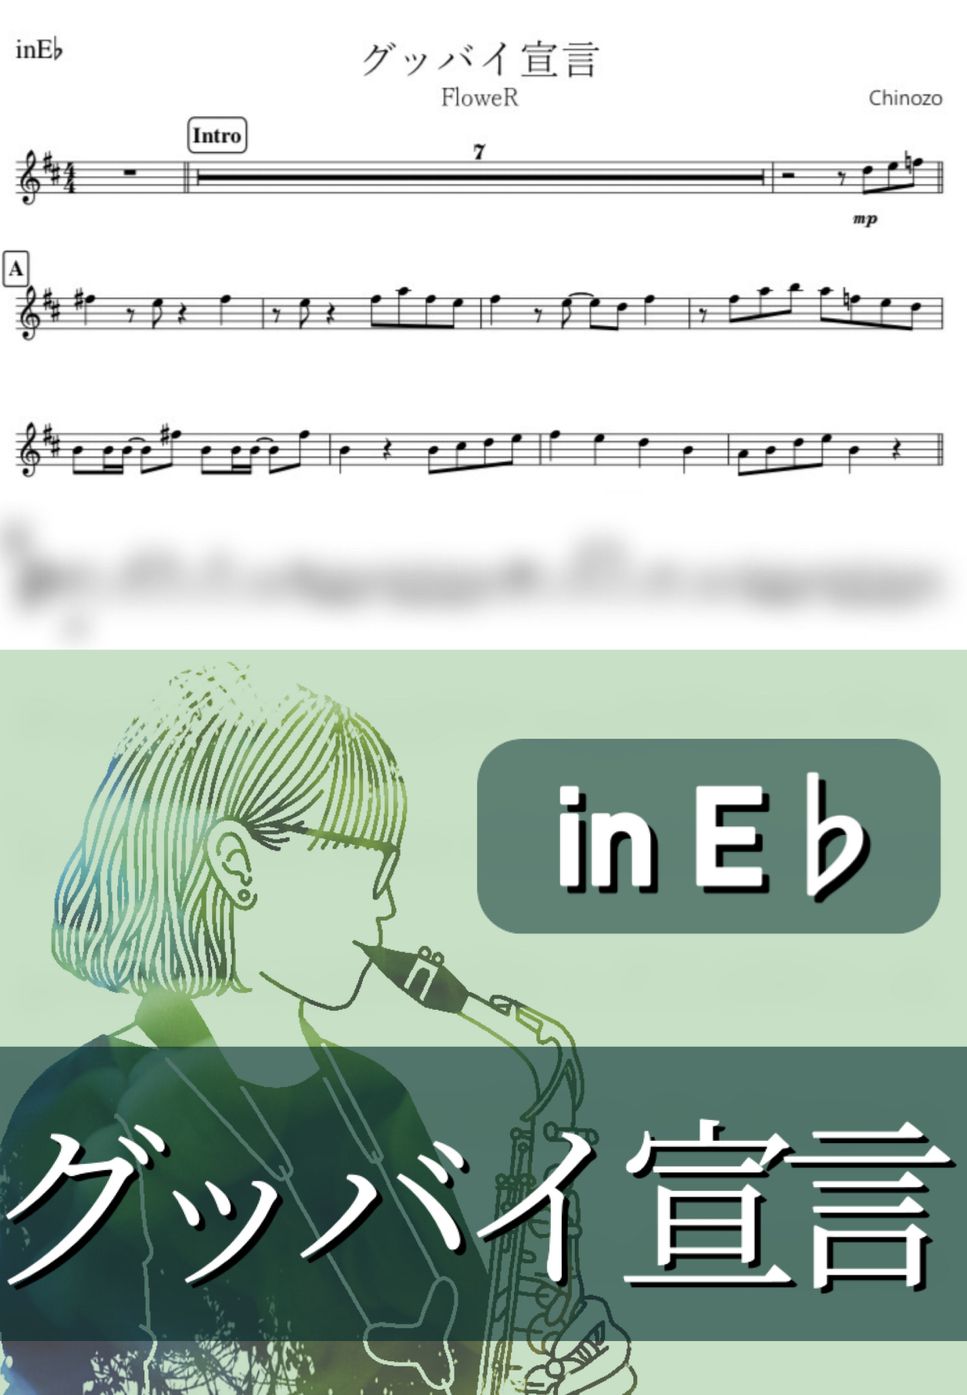 Chinozo - グッバイ宣言 (E♭) by kanamusic